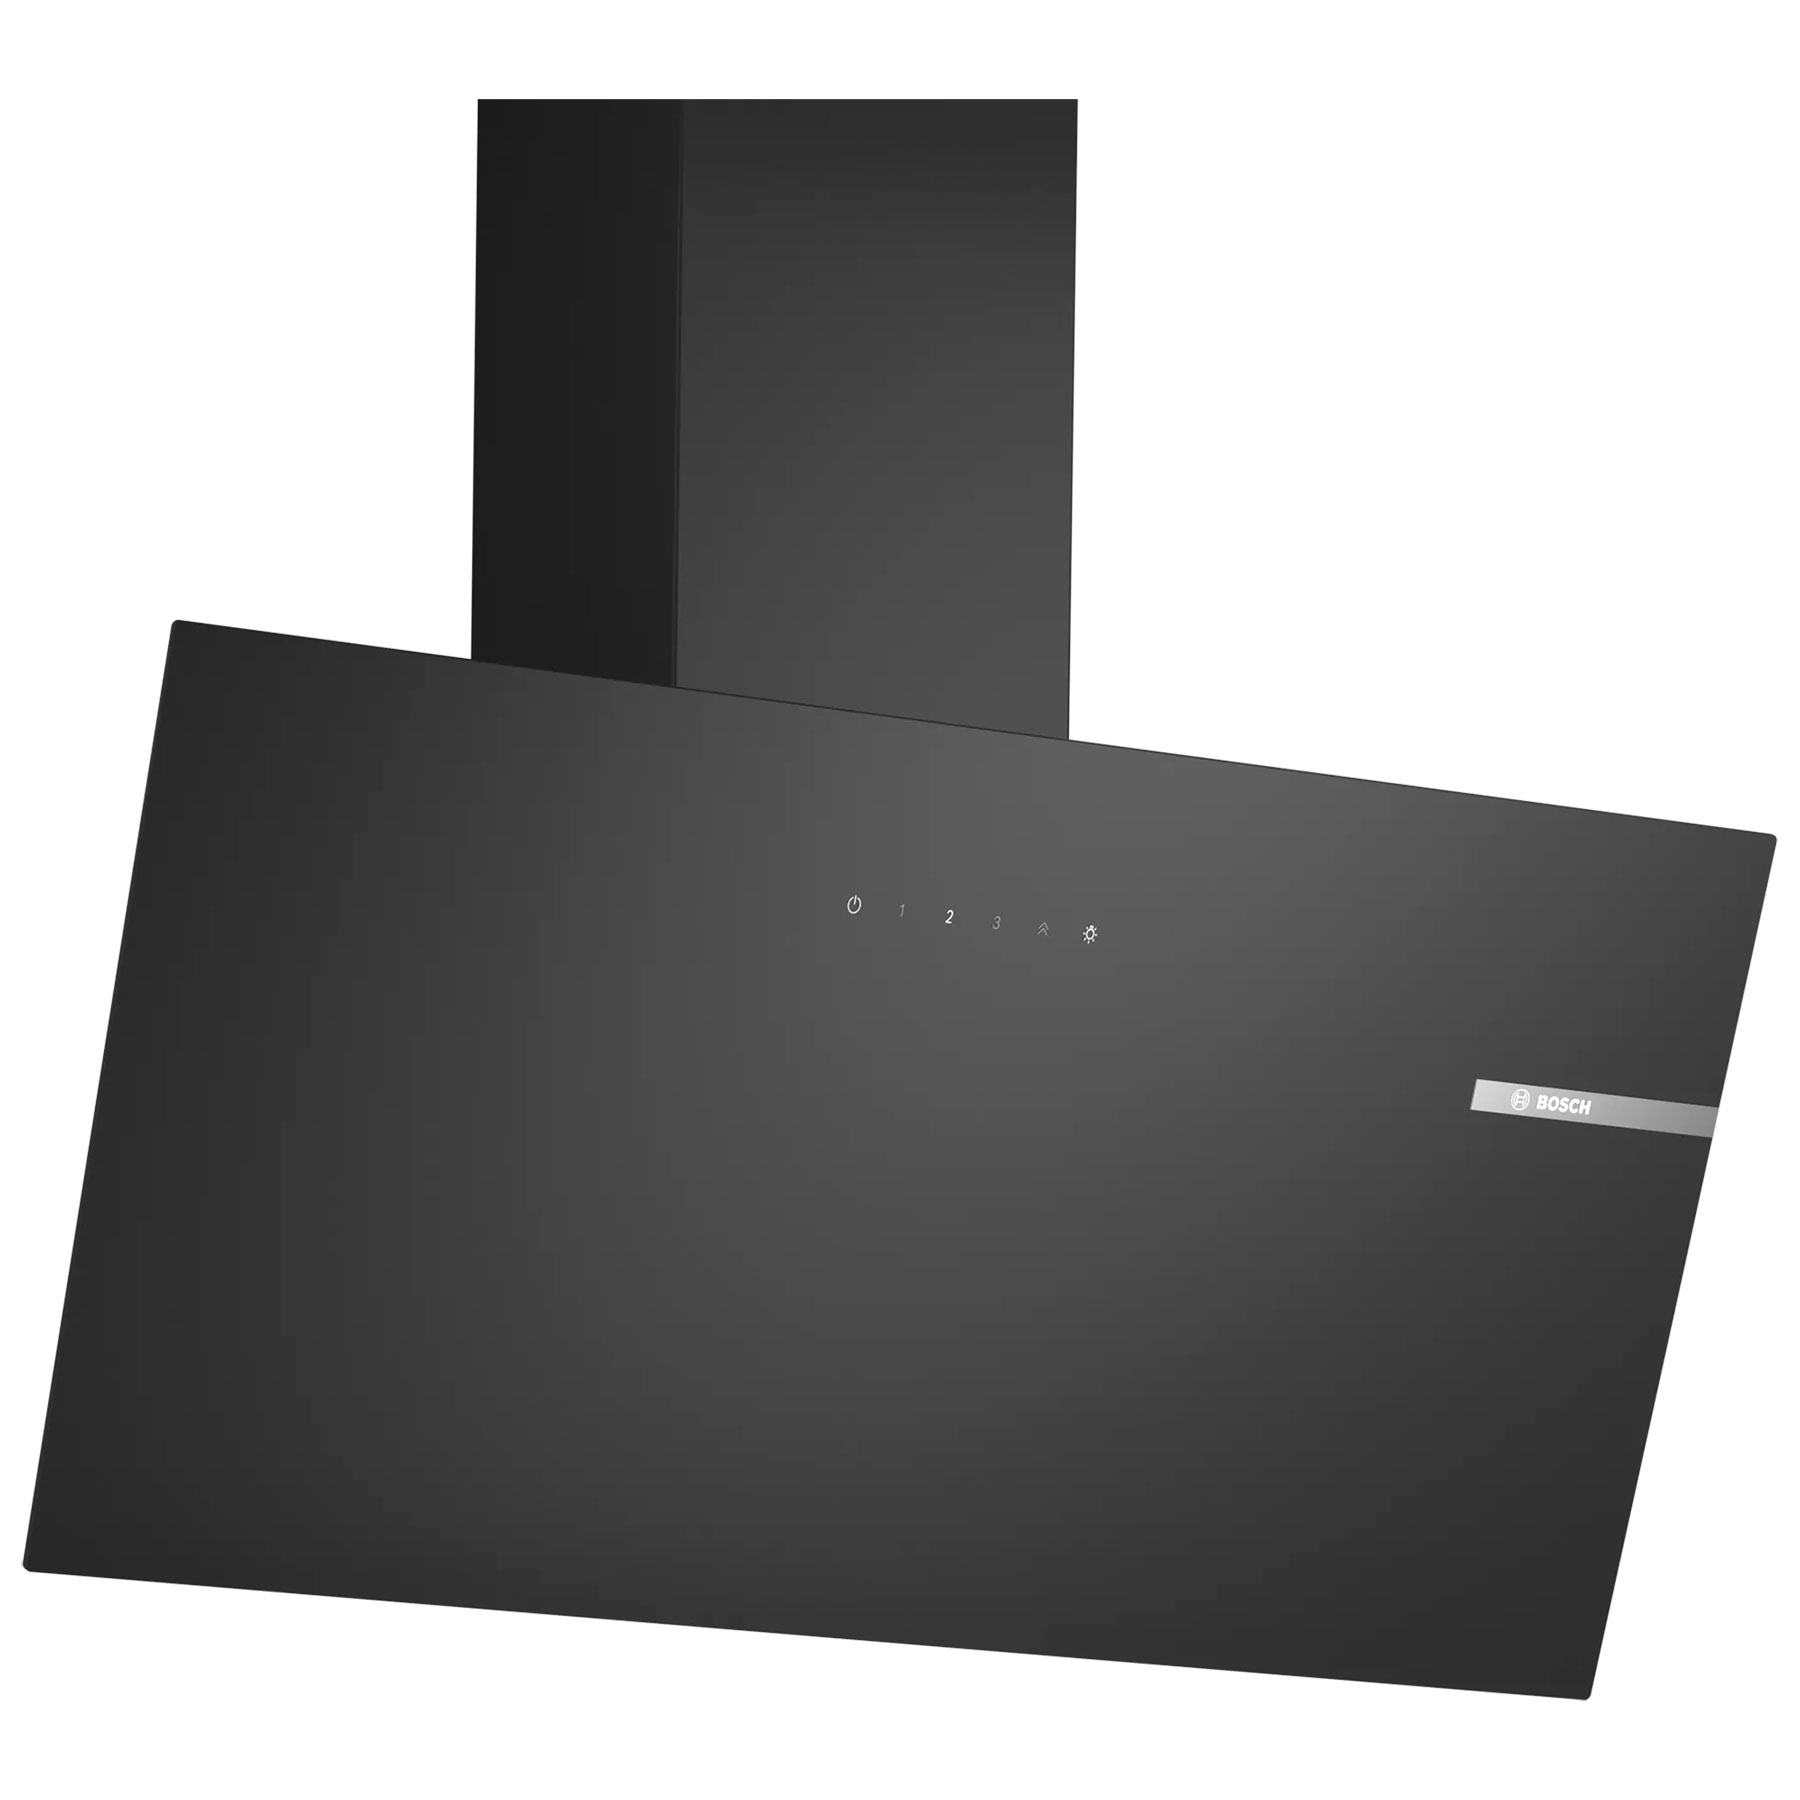 Image of Bosch DWK85DK60B Series 2 80cm Angled Chimney Hood in Black Glass